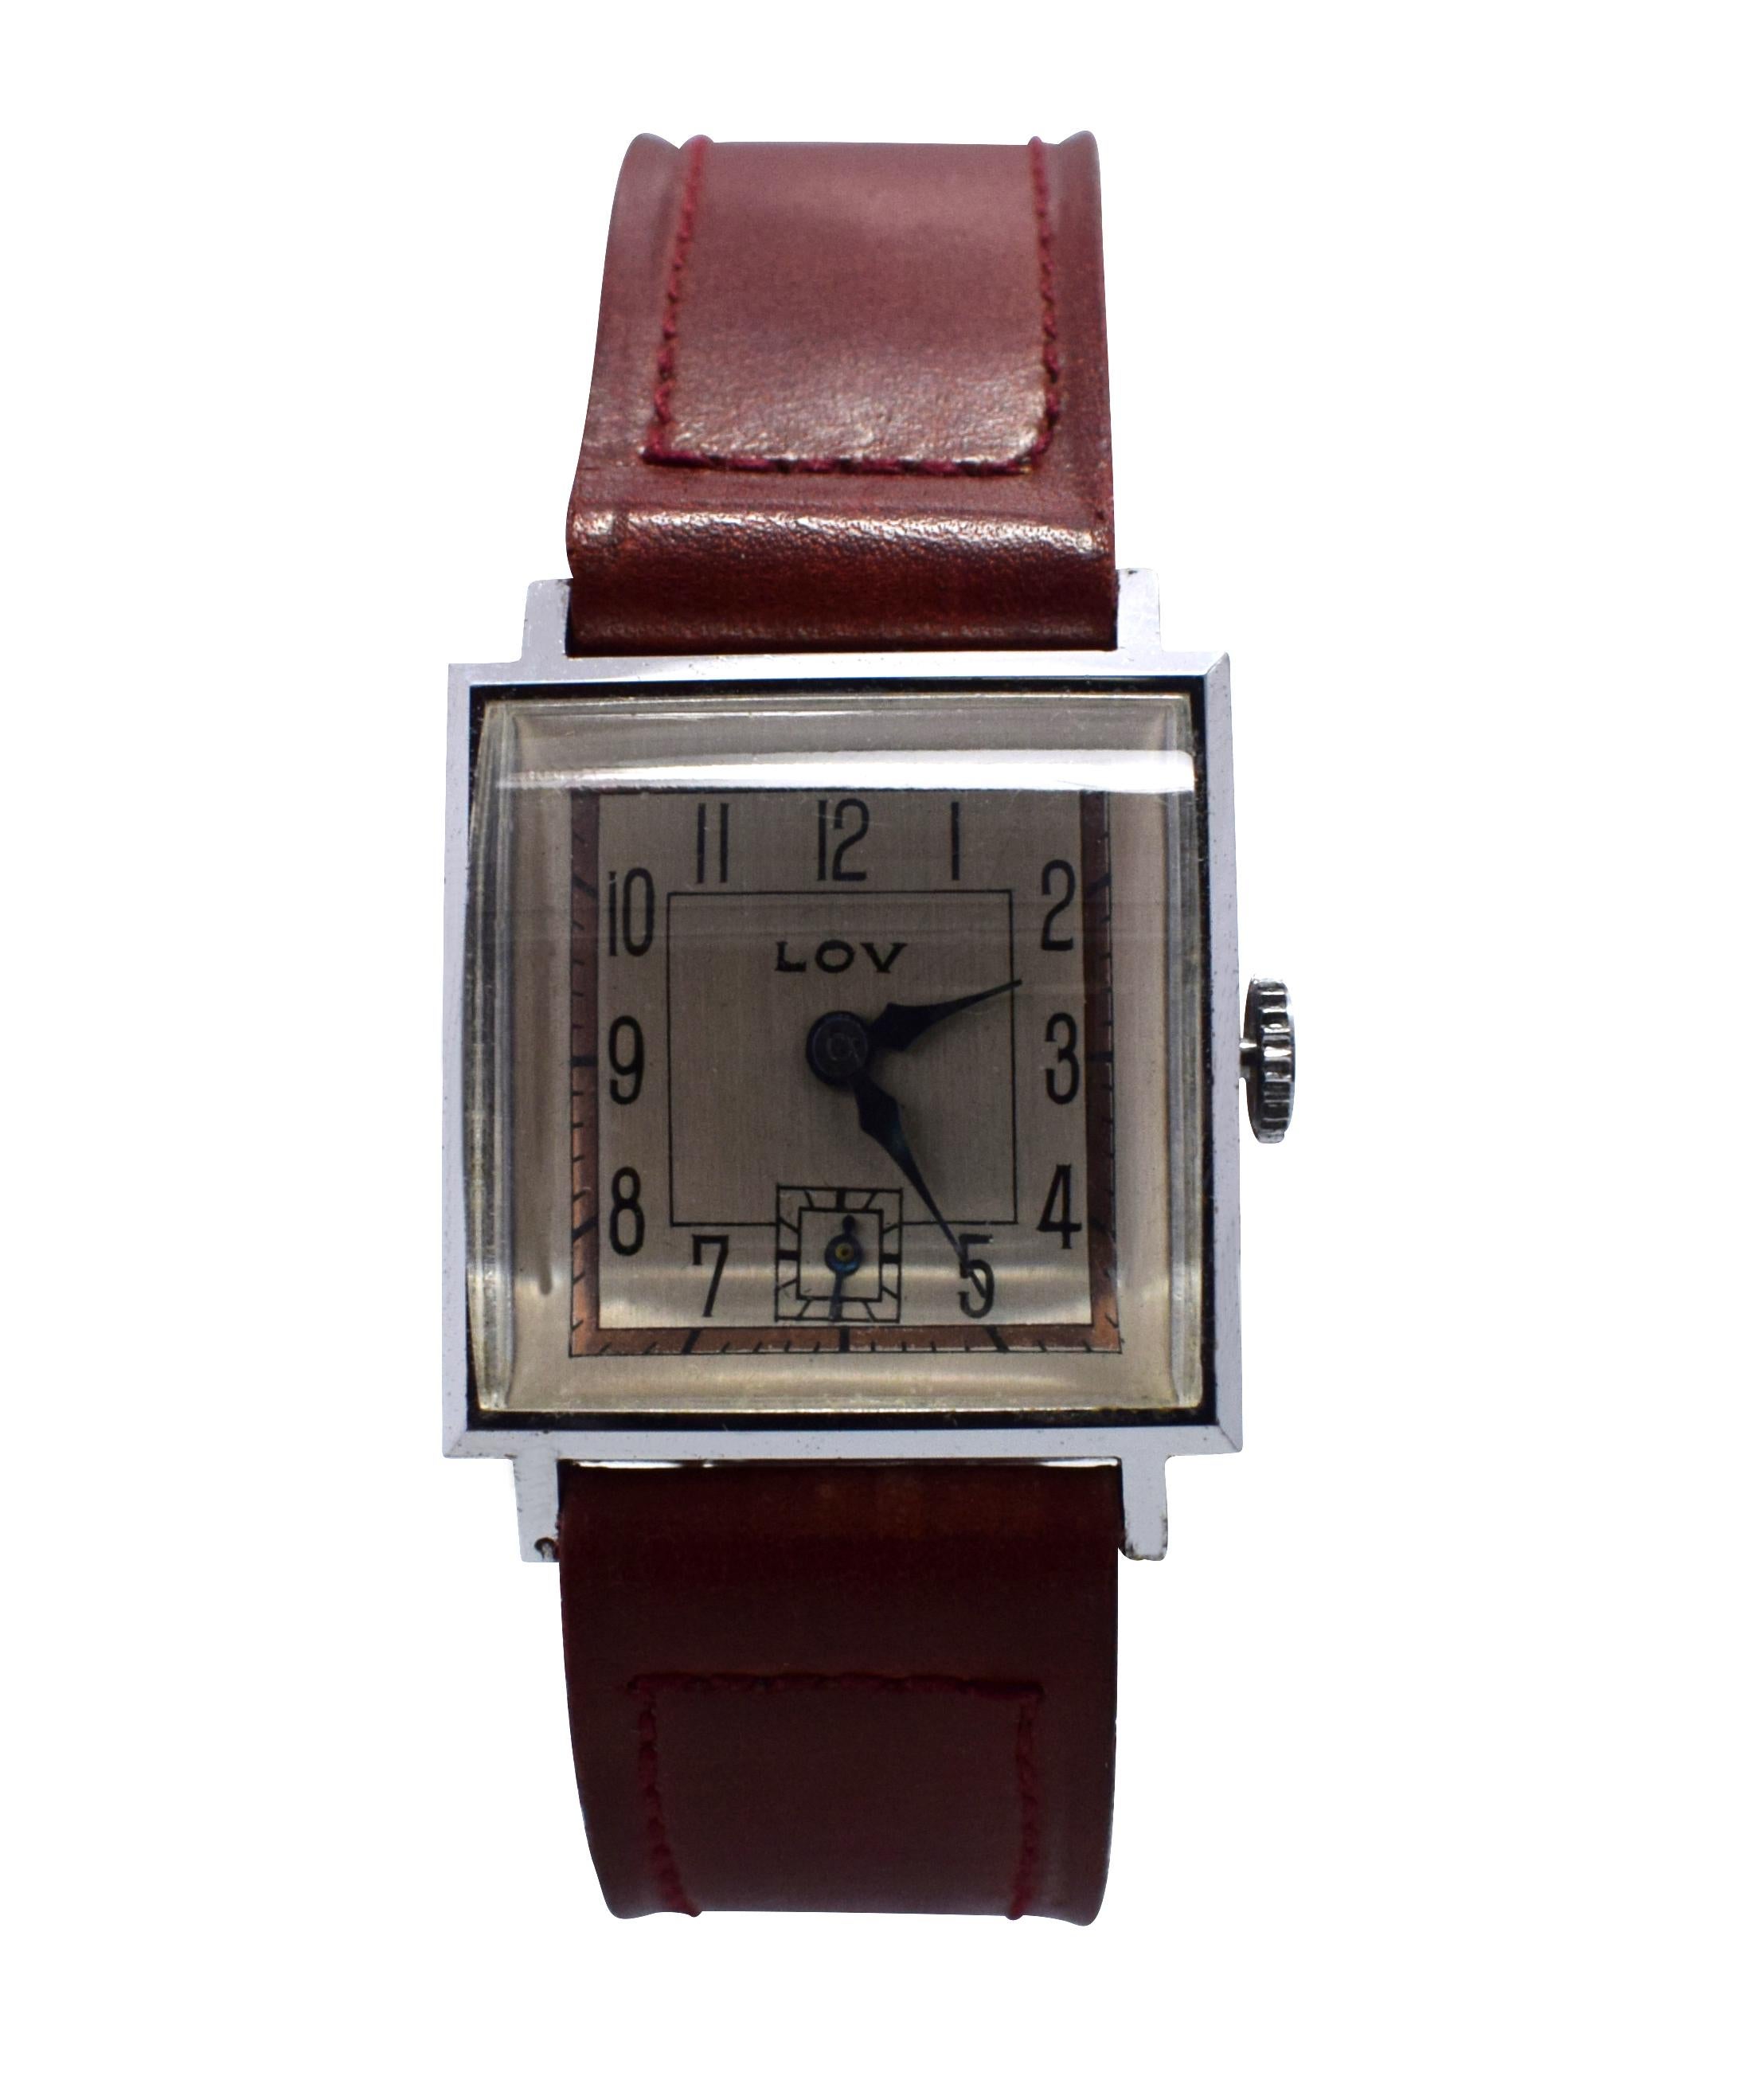 Stylish Art Deco Gents Wrist Watch by Lov or Never Worn, circa 1930 2